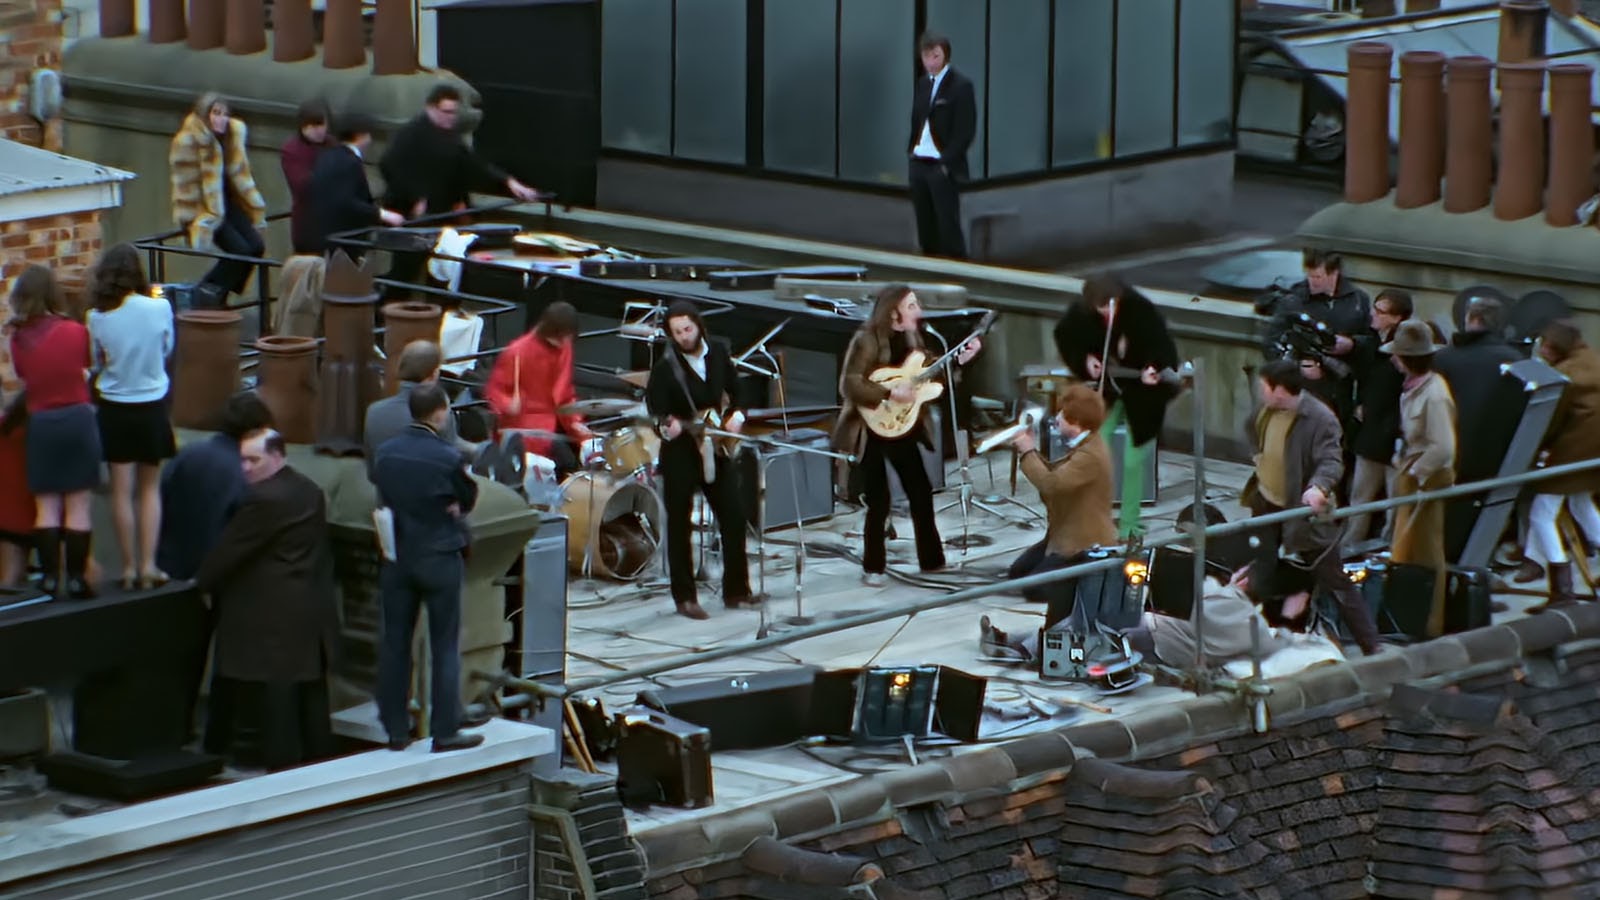 The Beatles’ famous rooftop performance. Image © Disney Studios